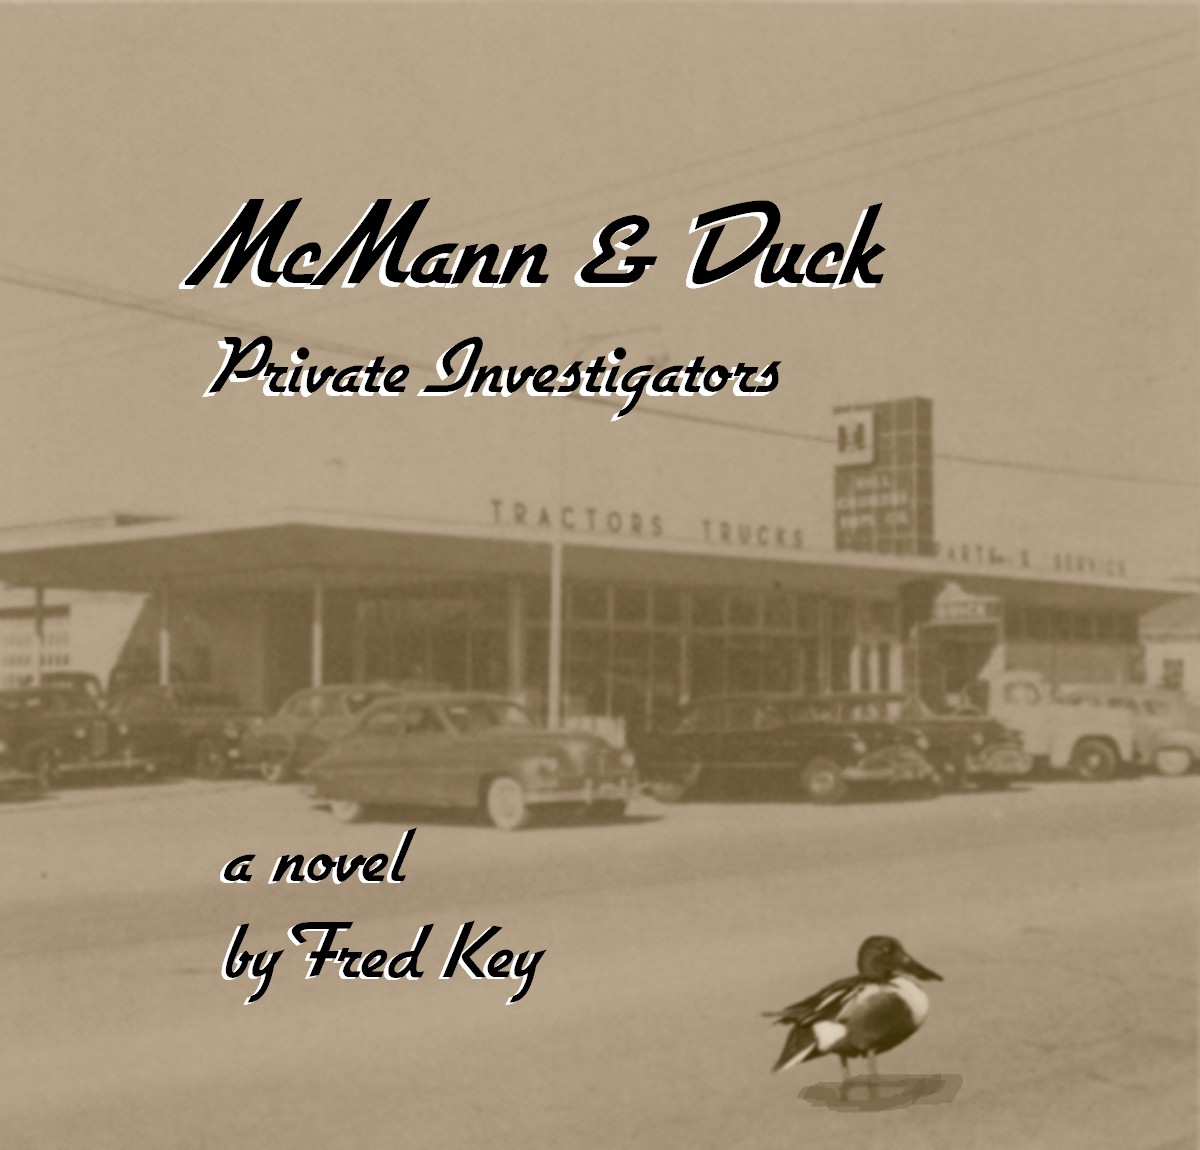 mcmann-and-duck.jpg